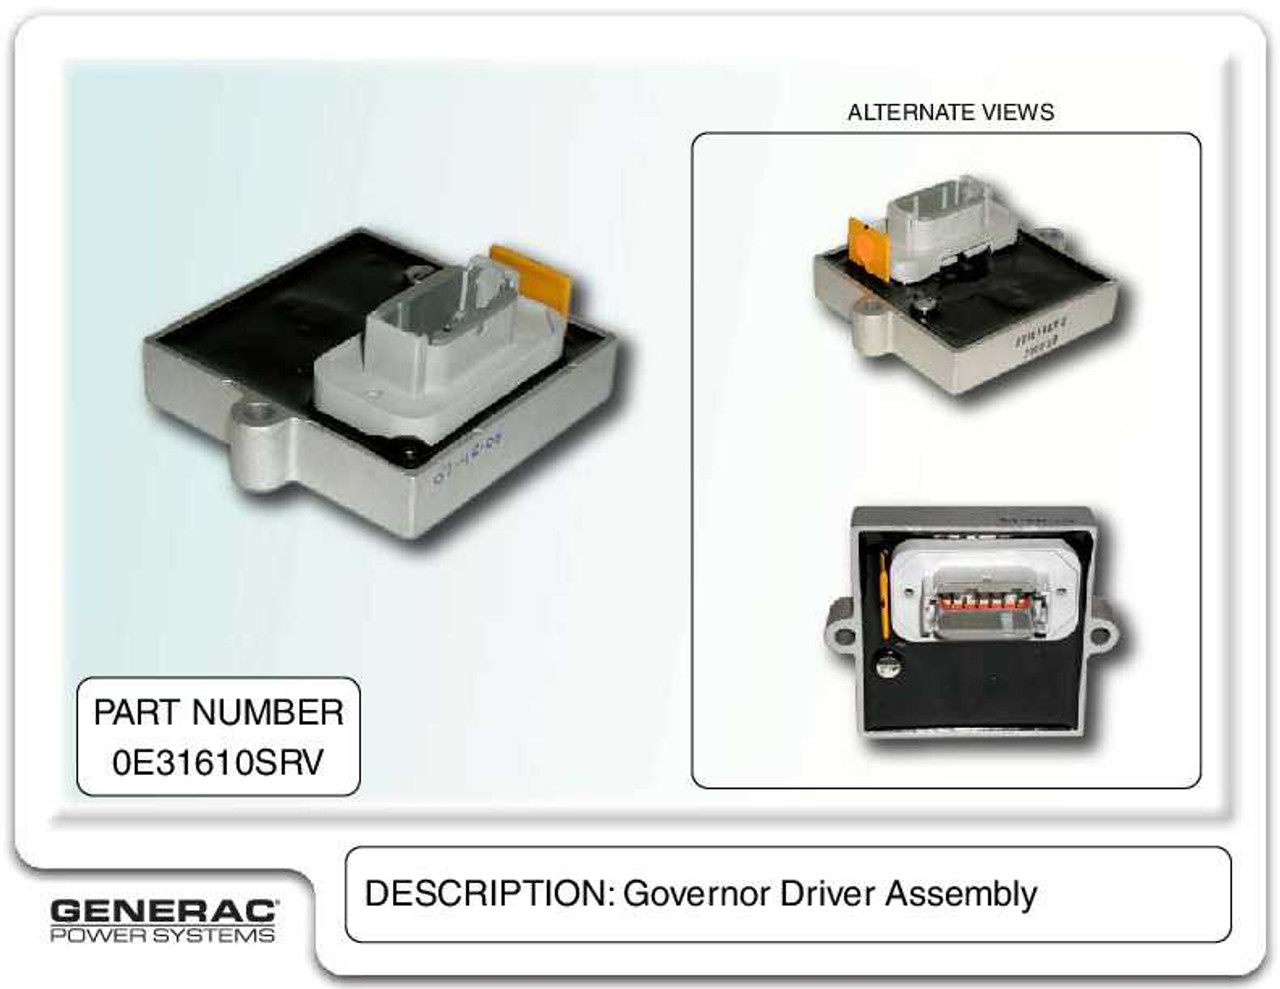 Generac 0E31610SRV Bosch Actuator Governor Driver Pcb with Specs